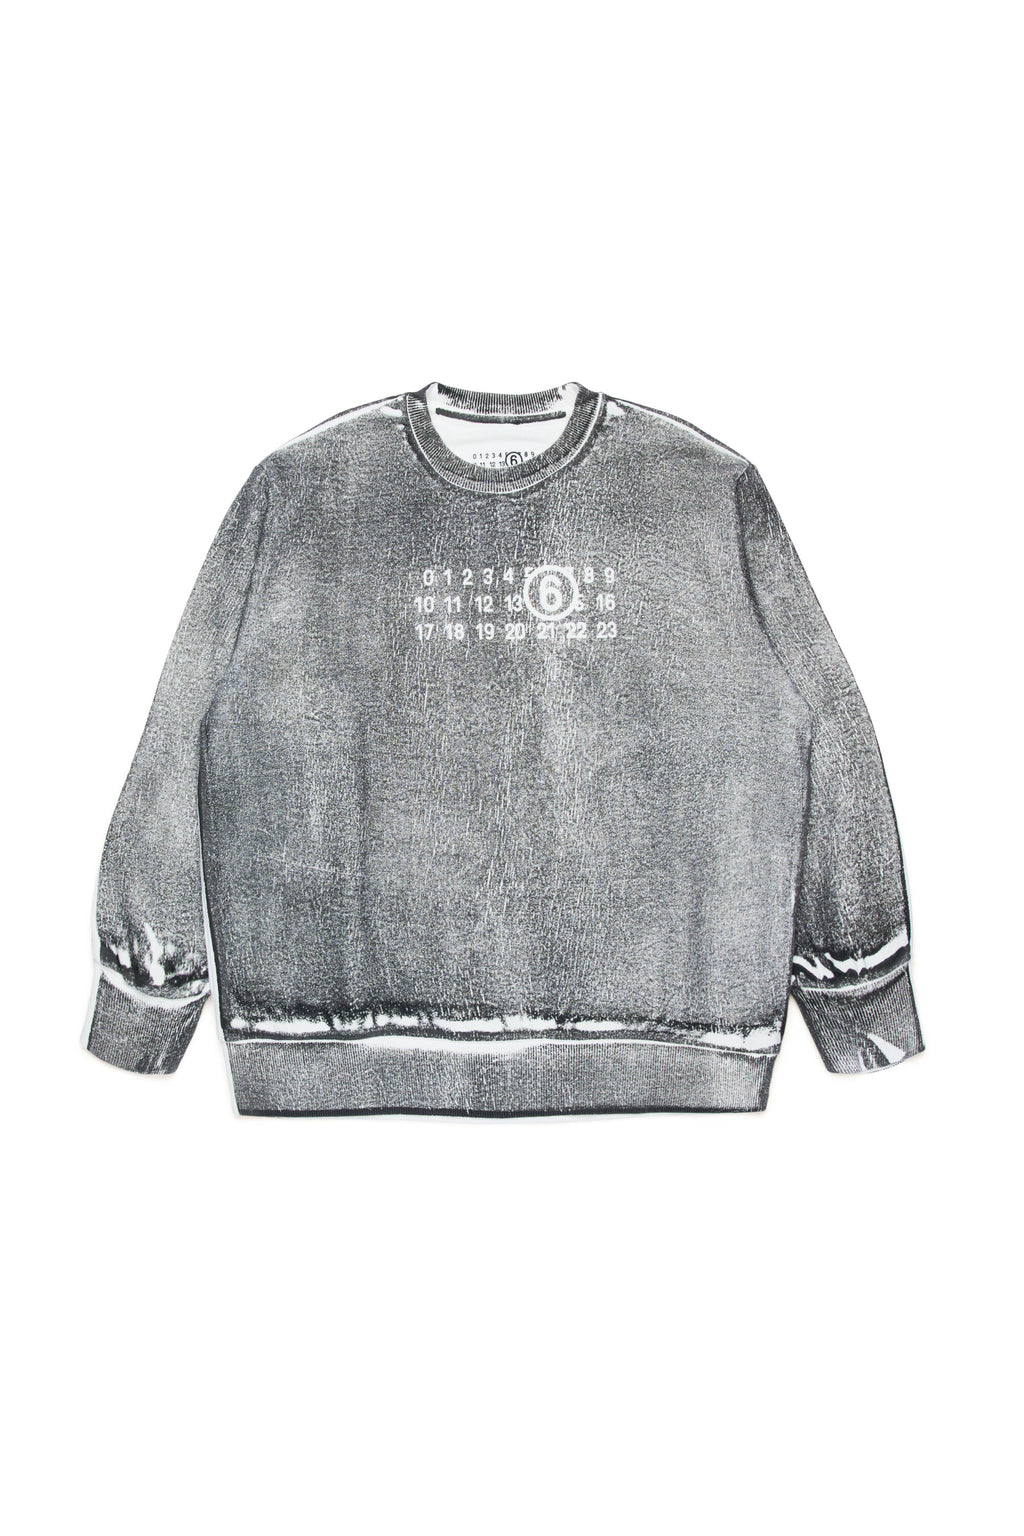 Sweatshirt with faded effect print